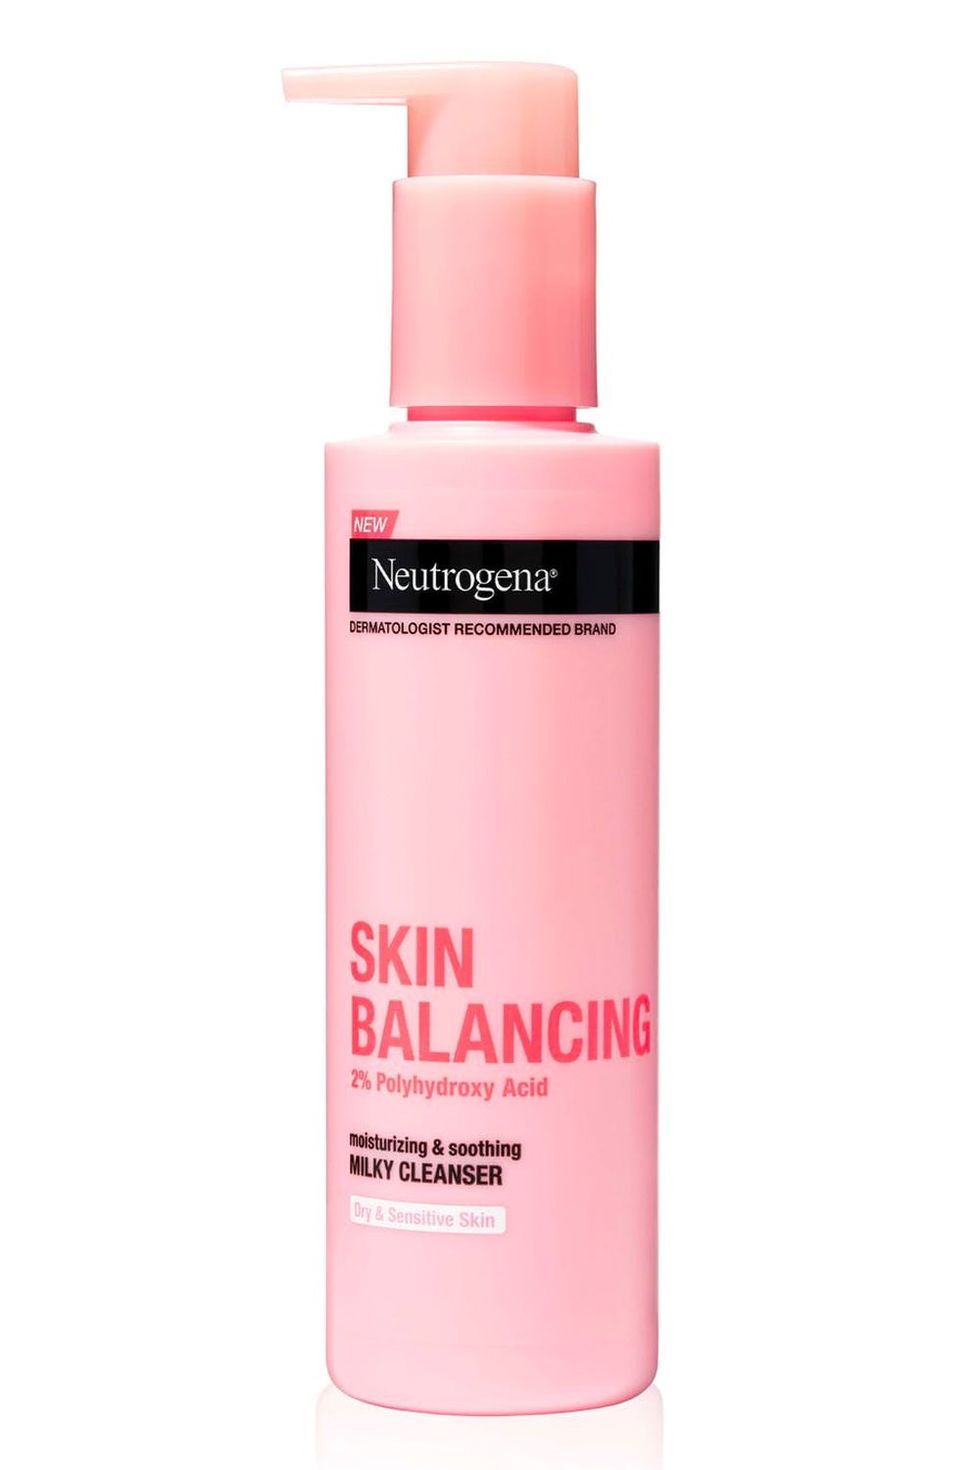 Neutrogena Skin Balancing 2% Polyhydroxy Acid Milky Cleanser